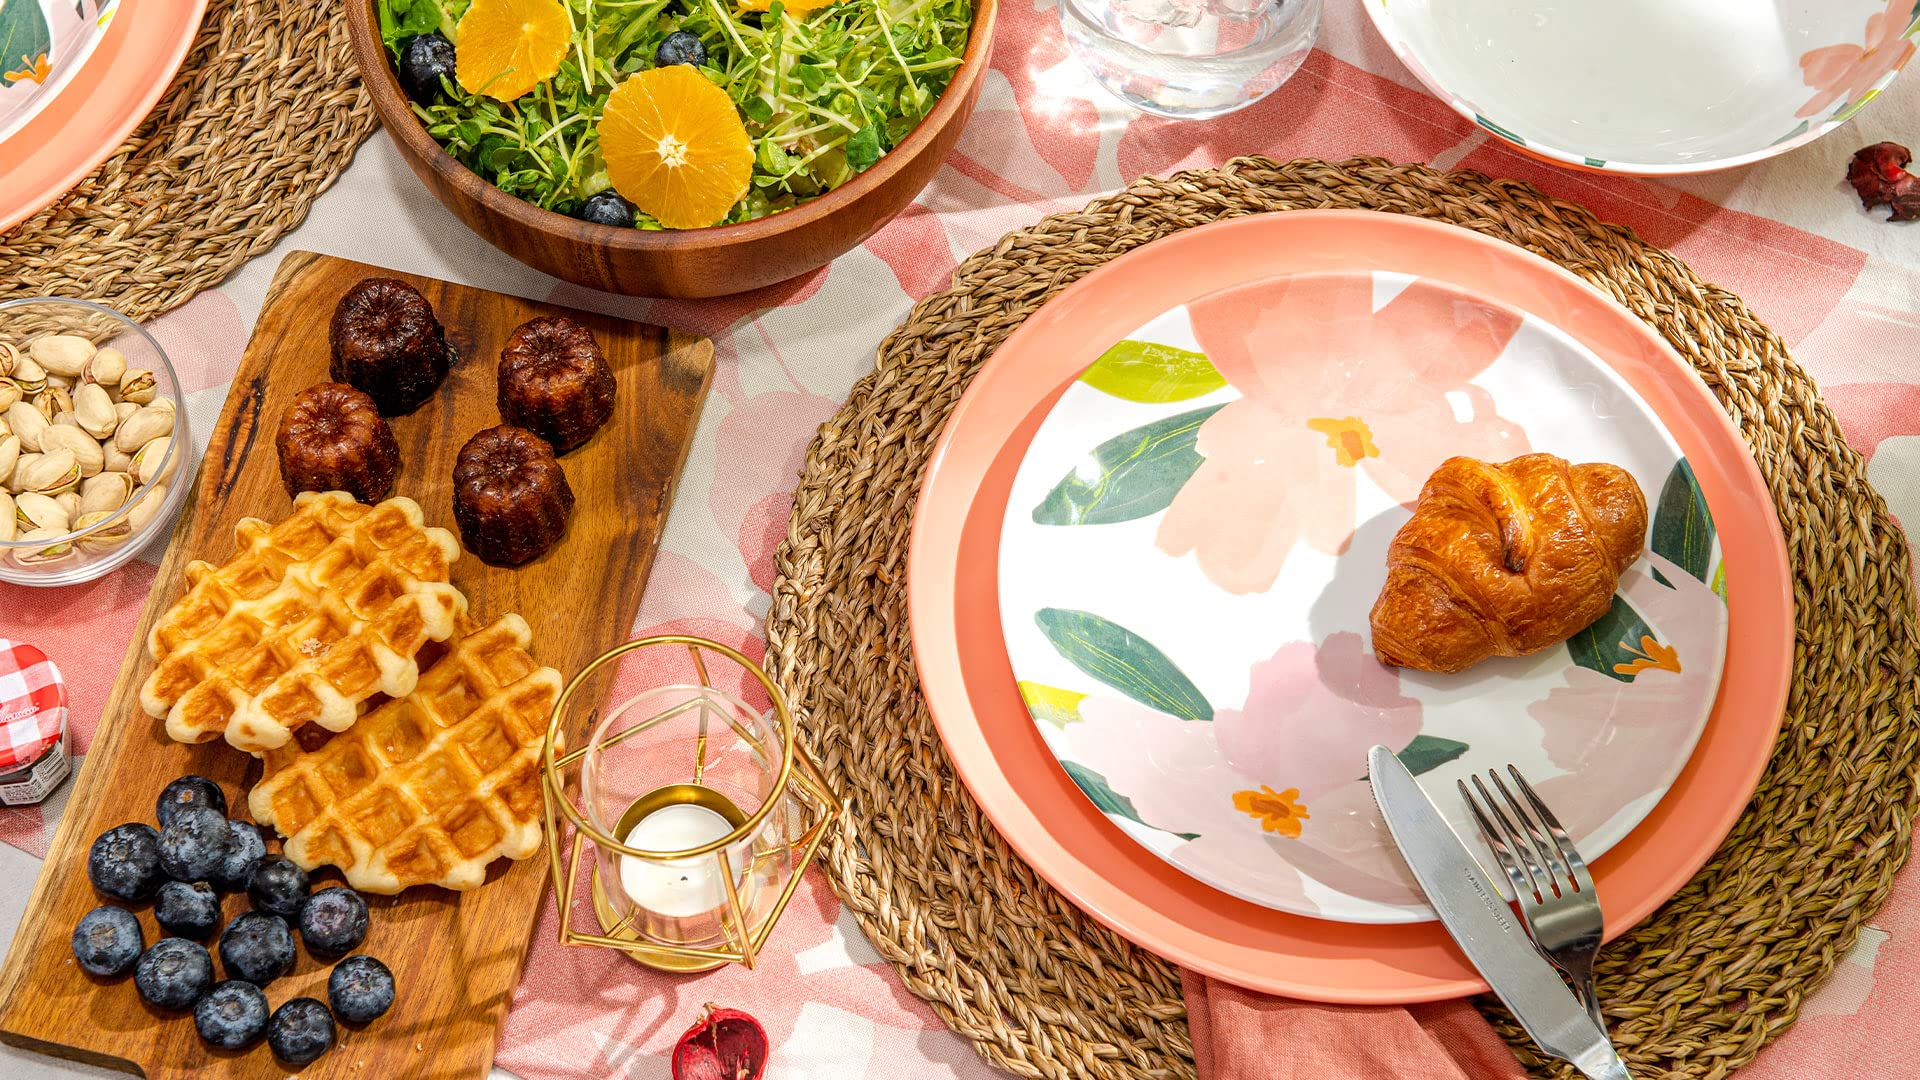 Zak Designs Melamine Dinnerware Set, 12-Piece, Service for 4, Blossom (Apricot)